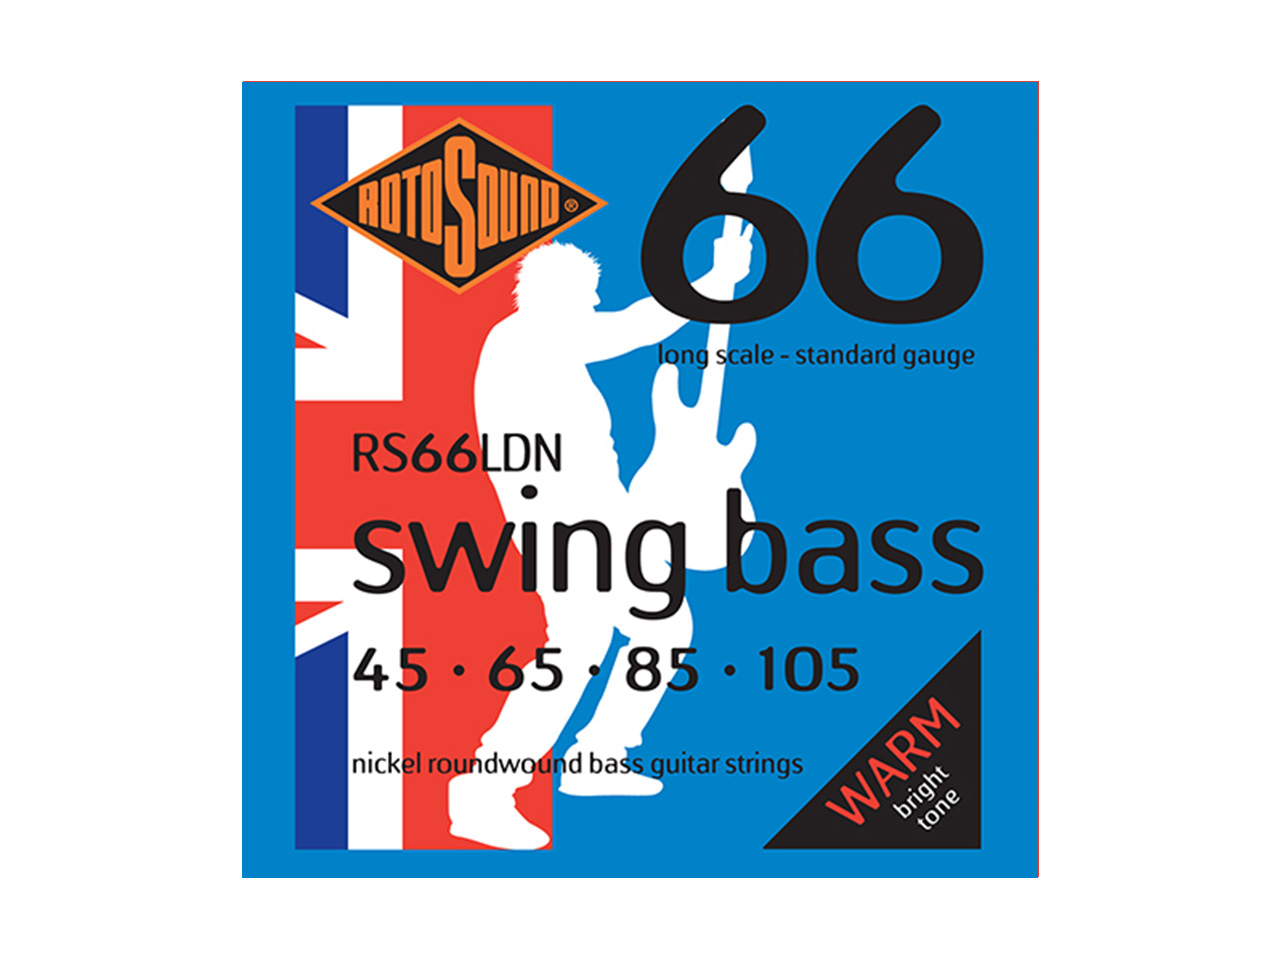 ROTOSOUND ( ロトサウンド ) SWING BASS 66  Standard Nickel Roundwound / RS66LDN 45-105 (エレキベース弦/LONG SCALE)